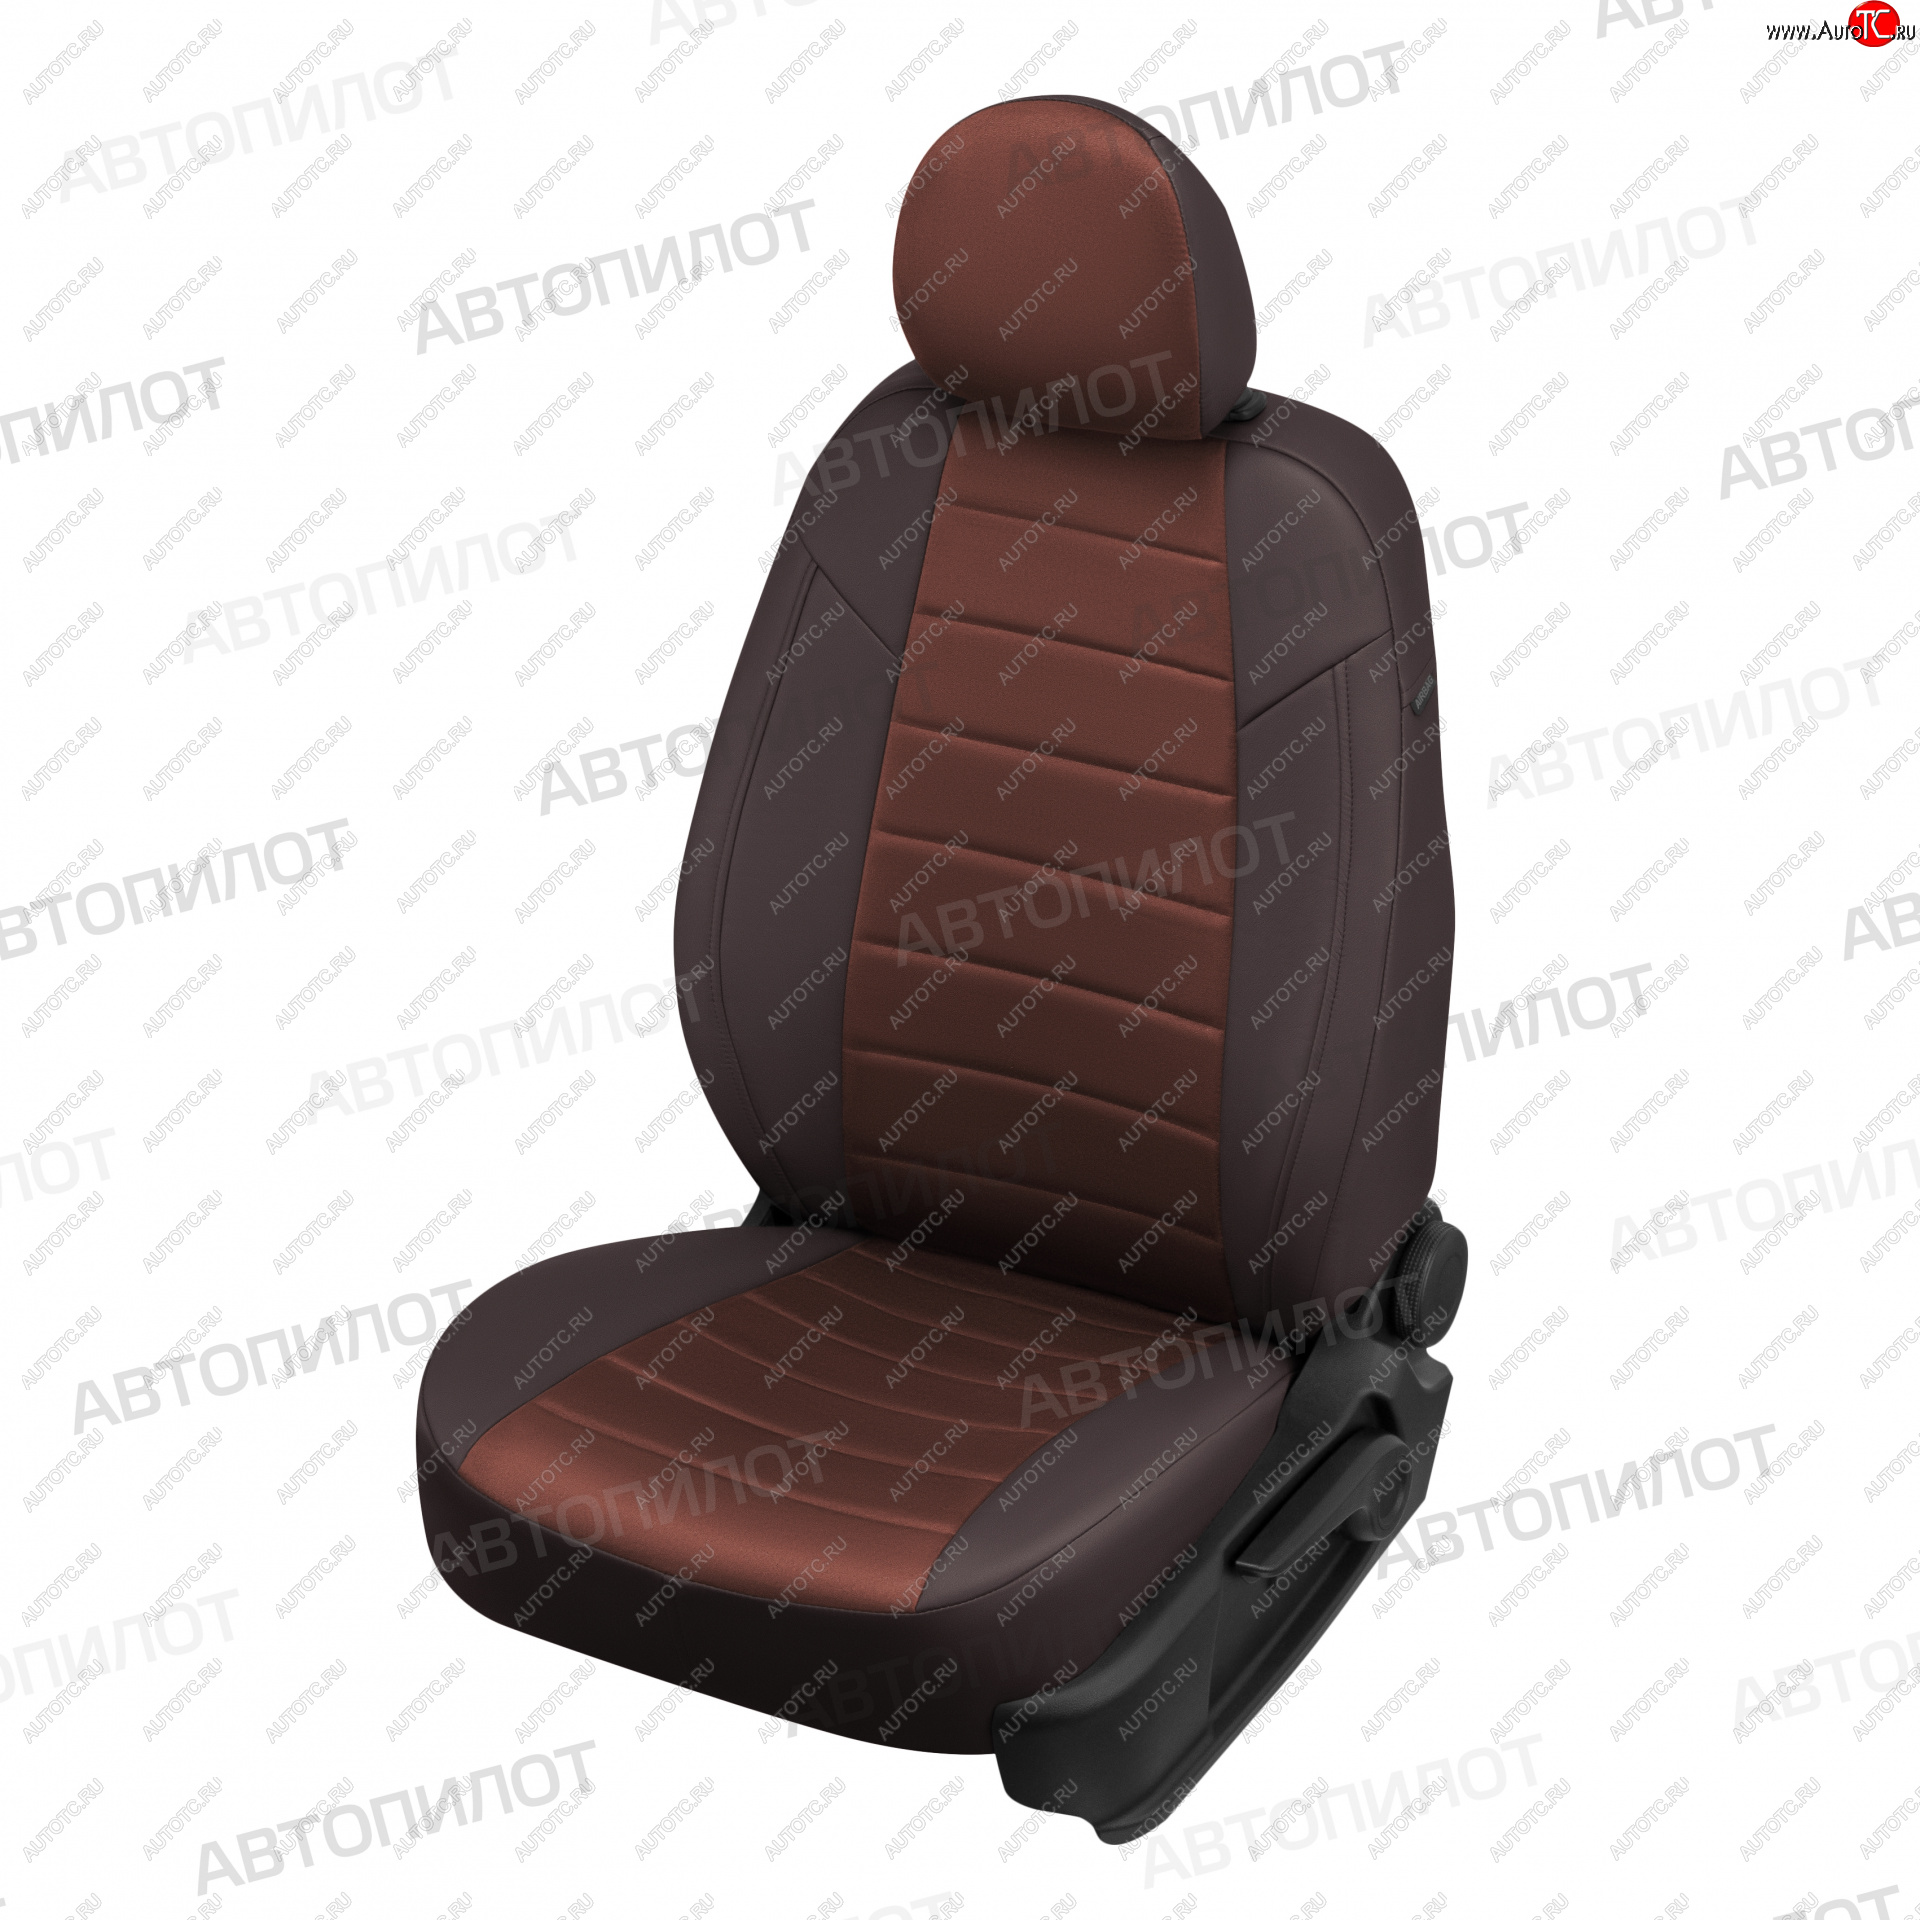 13 449 р. Чехлы сидений (экокожа/алькантара) Автопилот  Land Rover Discovery Sport  L550 (2014-2019) (шоколад)